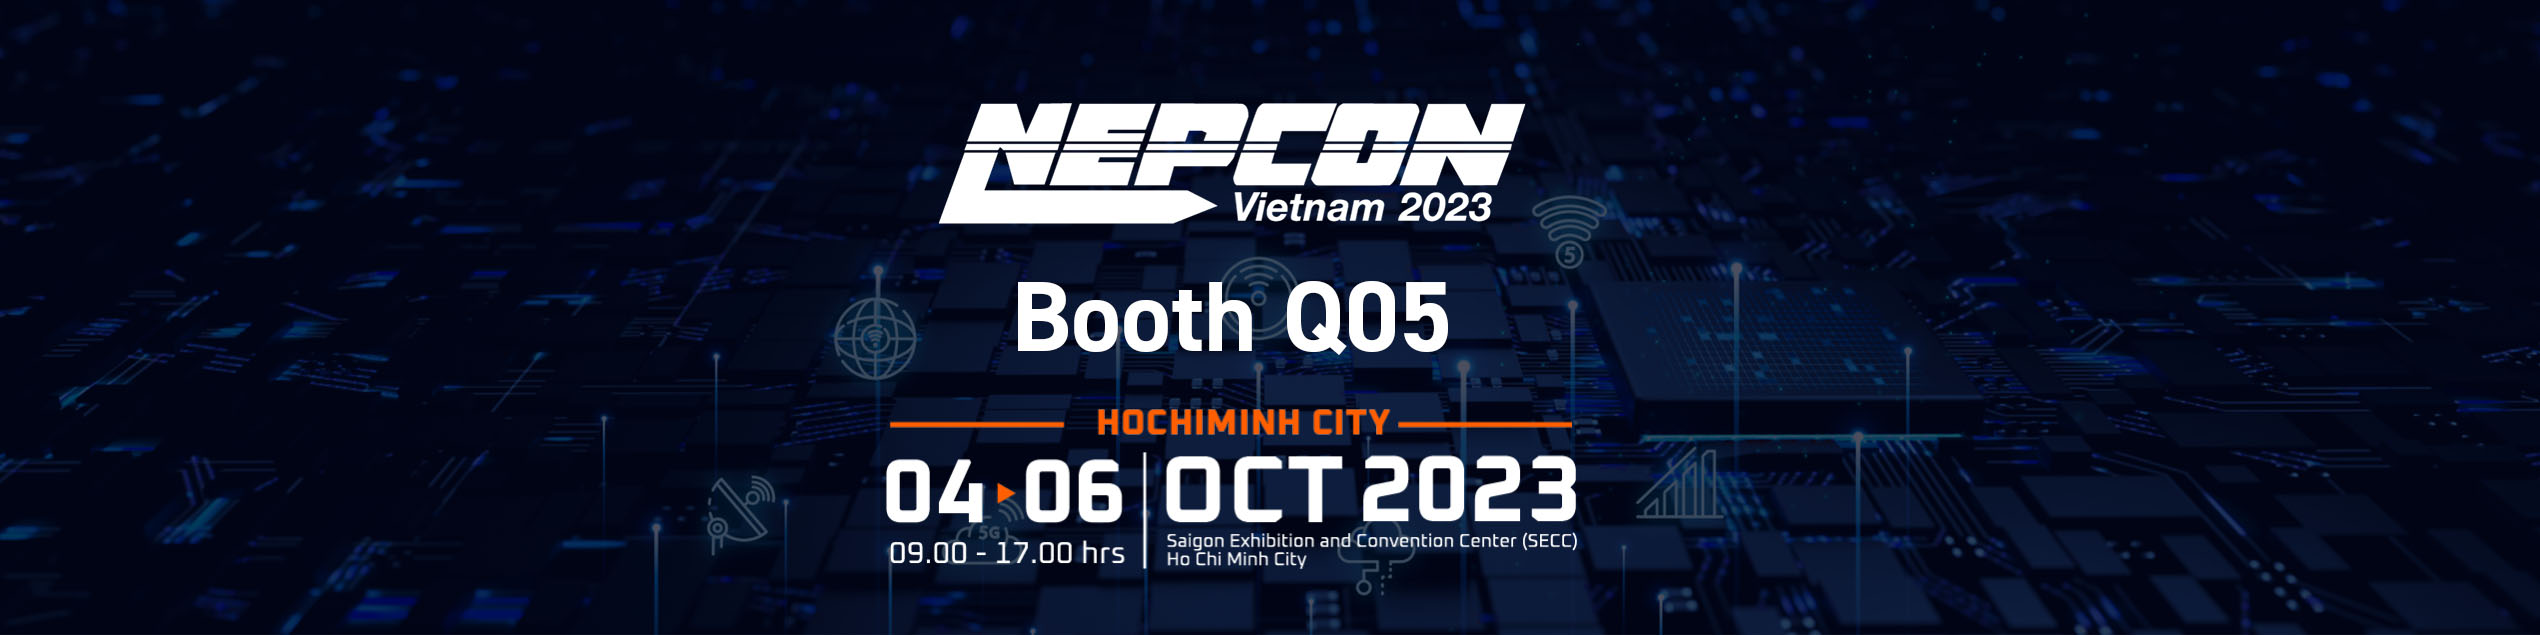 Nepcon Vietnam 2023